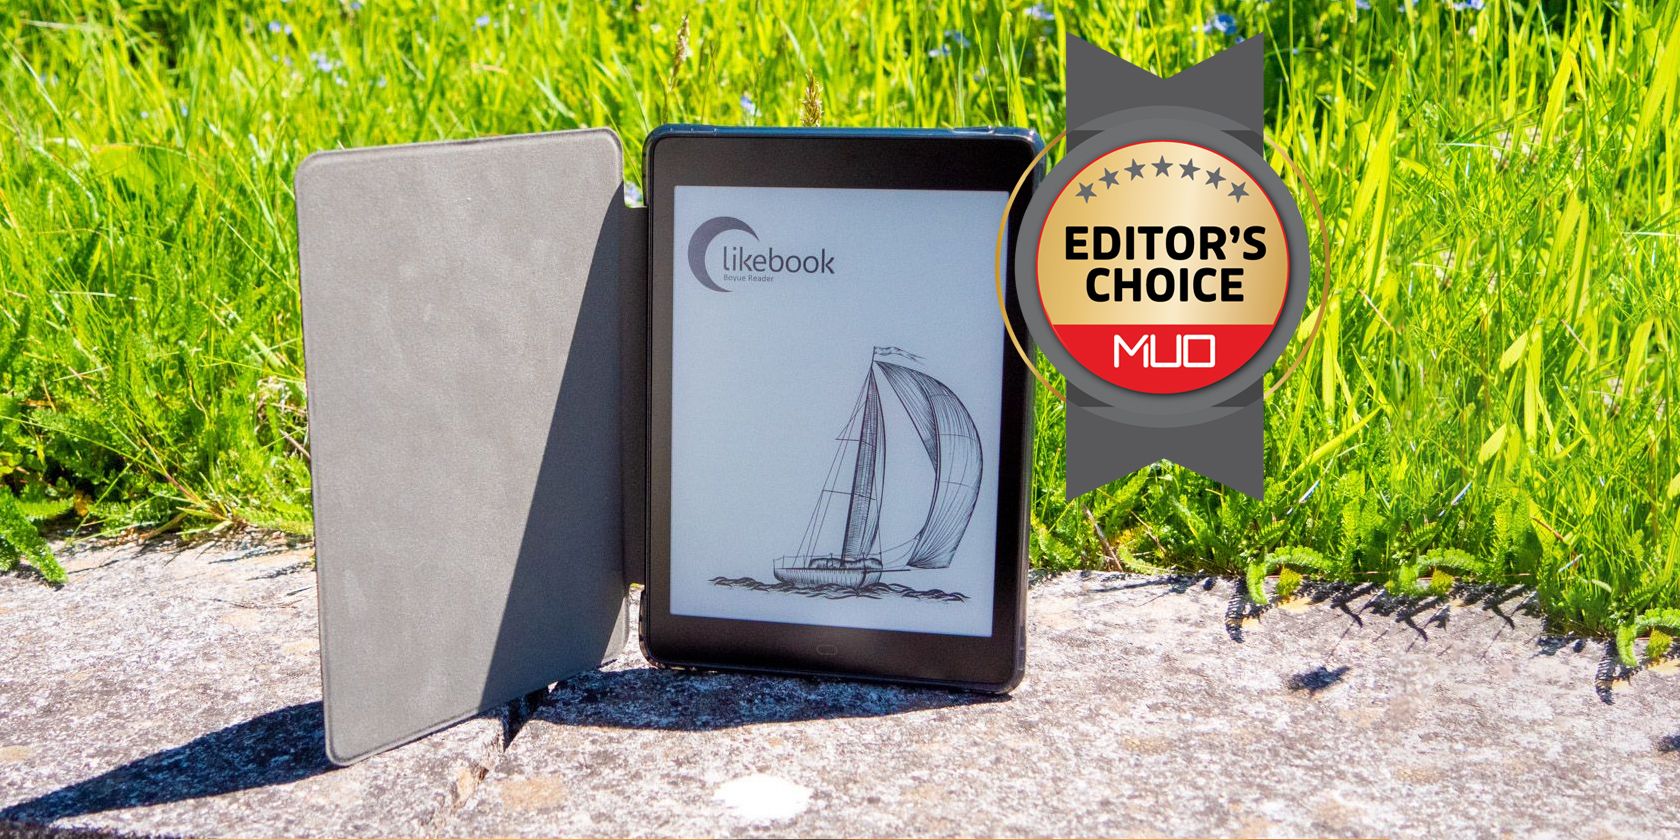 boyue likebook p78 editors choice